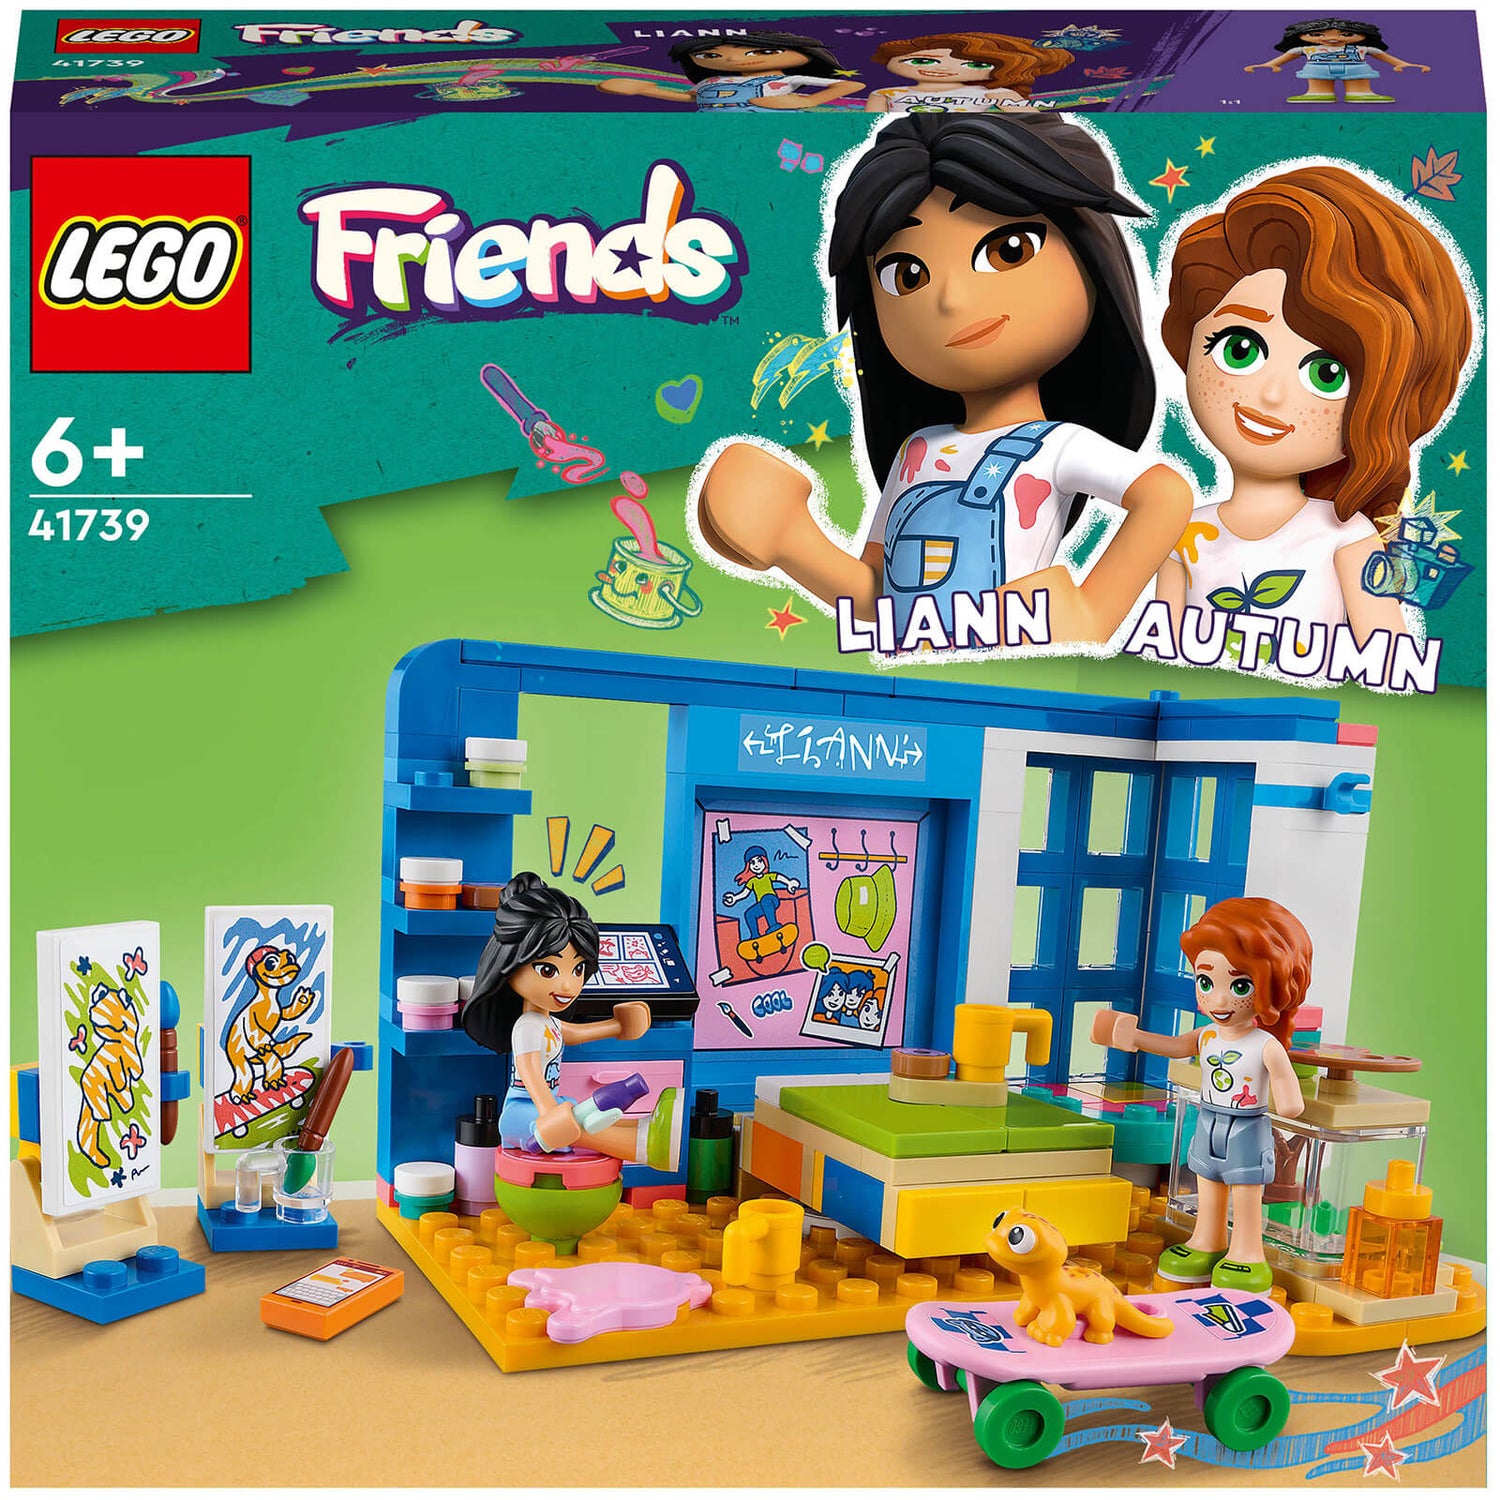 LEGO Friends: Make New Friends